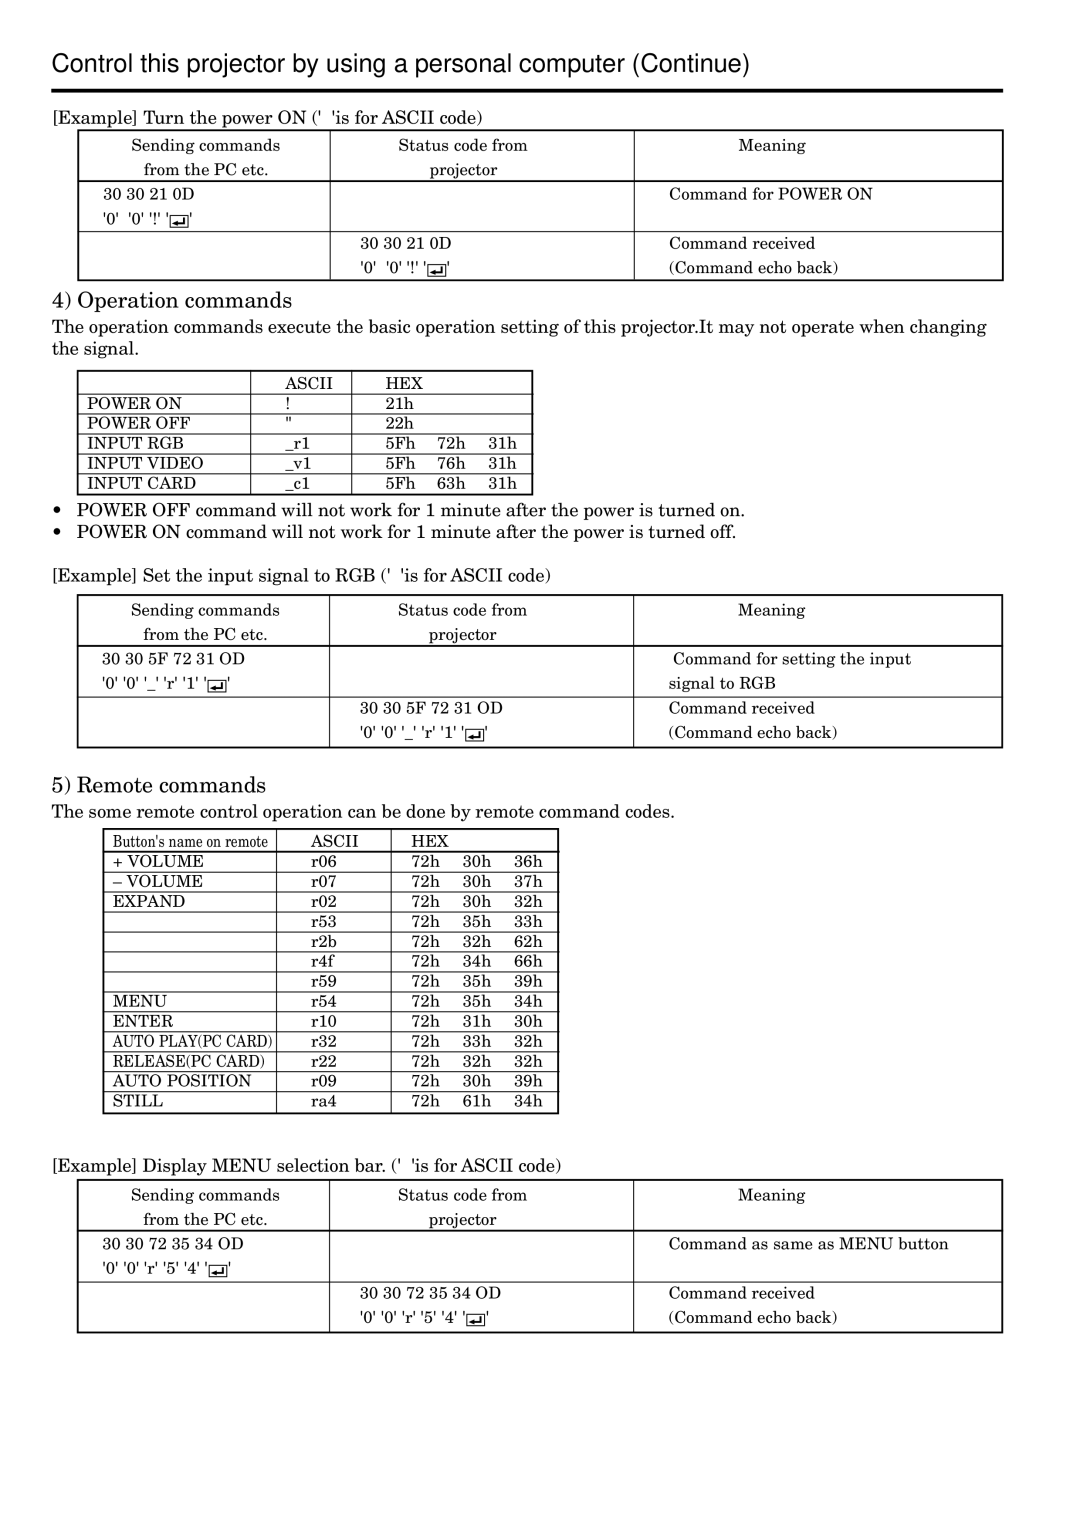 Mitsubishi Electronics LVP-S120A user manual Operation commands, Remote commands 